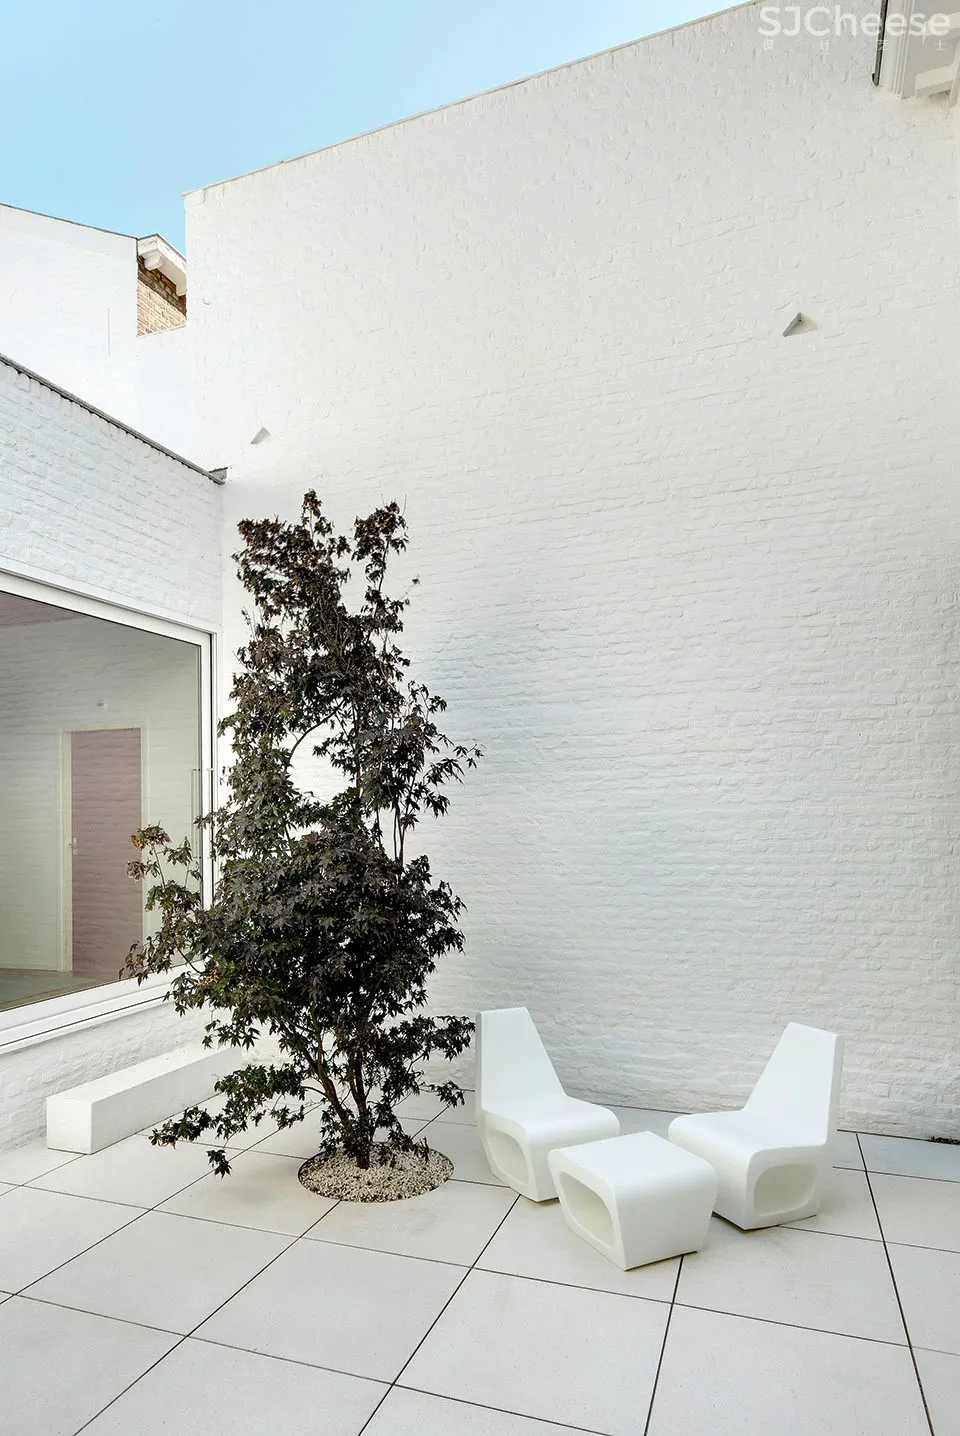 Zenden酒店，荷兰 / Wiel Arets Architects-时刻设计网